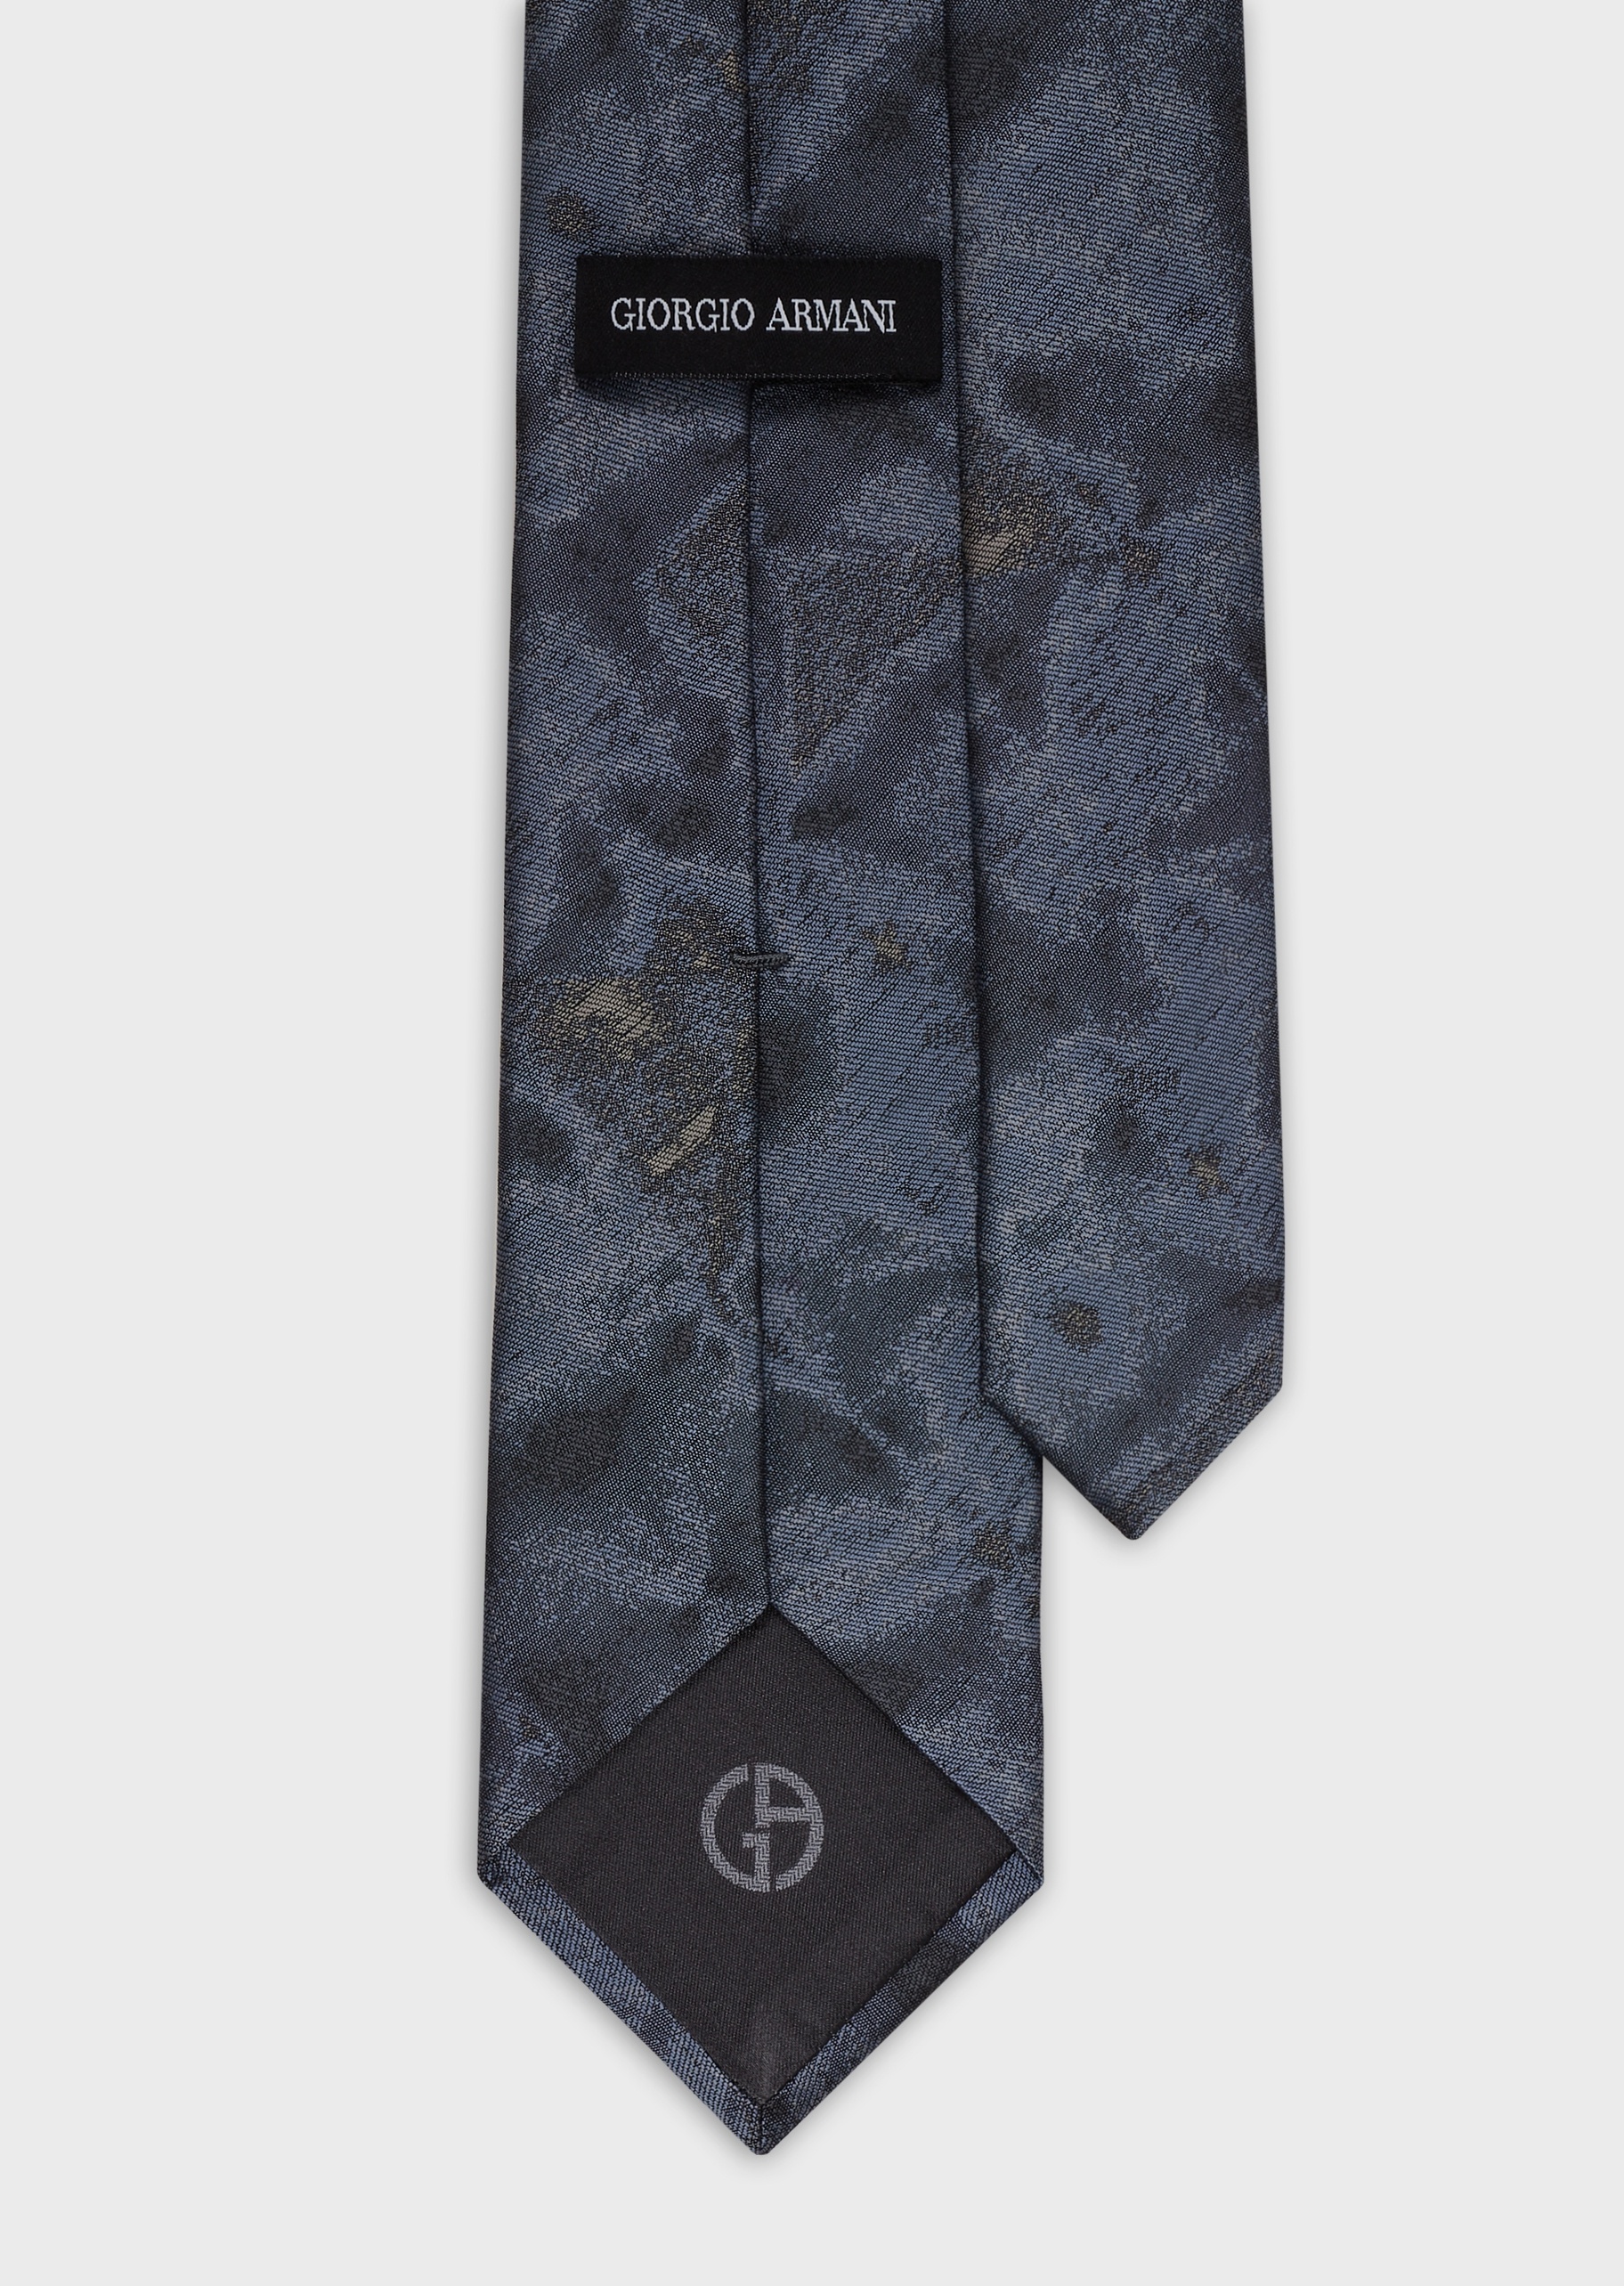 Giorgio Armani 双色几何提花领带